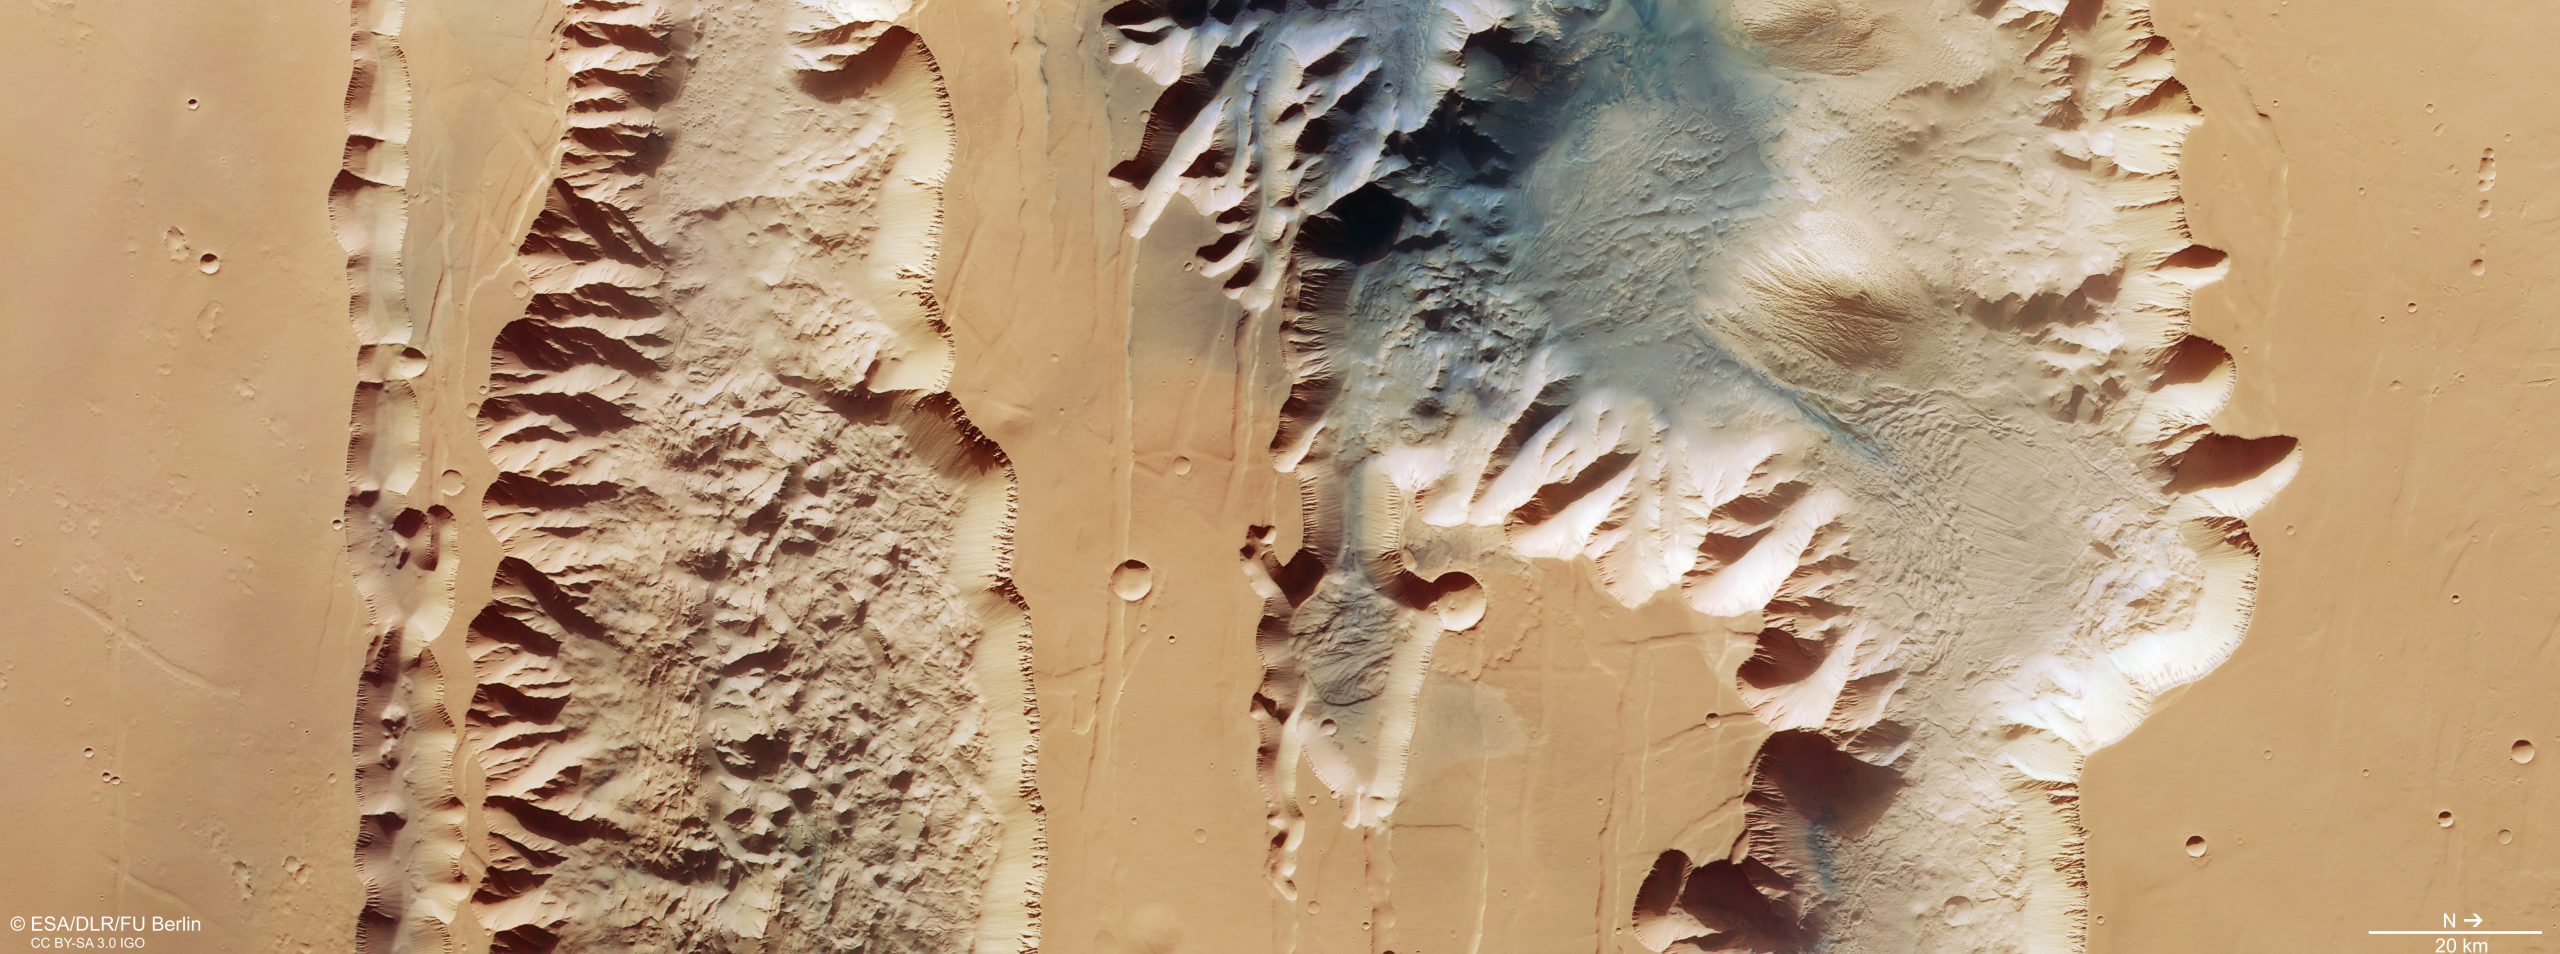 A photograph showing Ius and Tithonium Chasmata on Mars. Image Credit: ESA/DLR/FU Berlin, CC BY-SA 3.0 IGO.